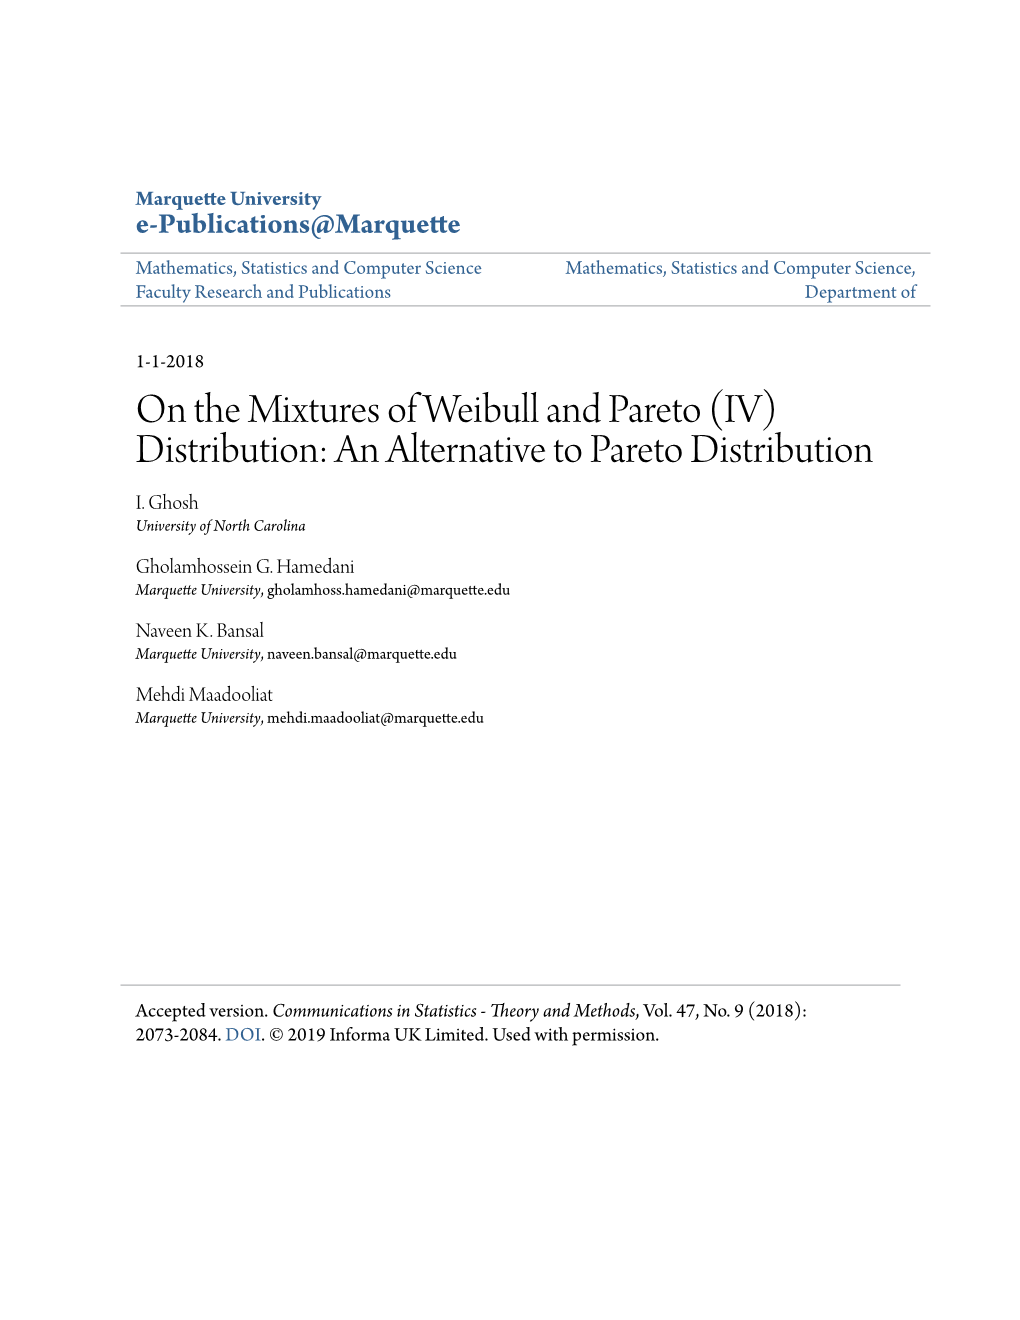 On the Mixtures of Weibull and Pareto (IV) Distribution: an Alternative to Pareto Distribution I